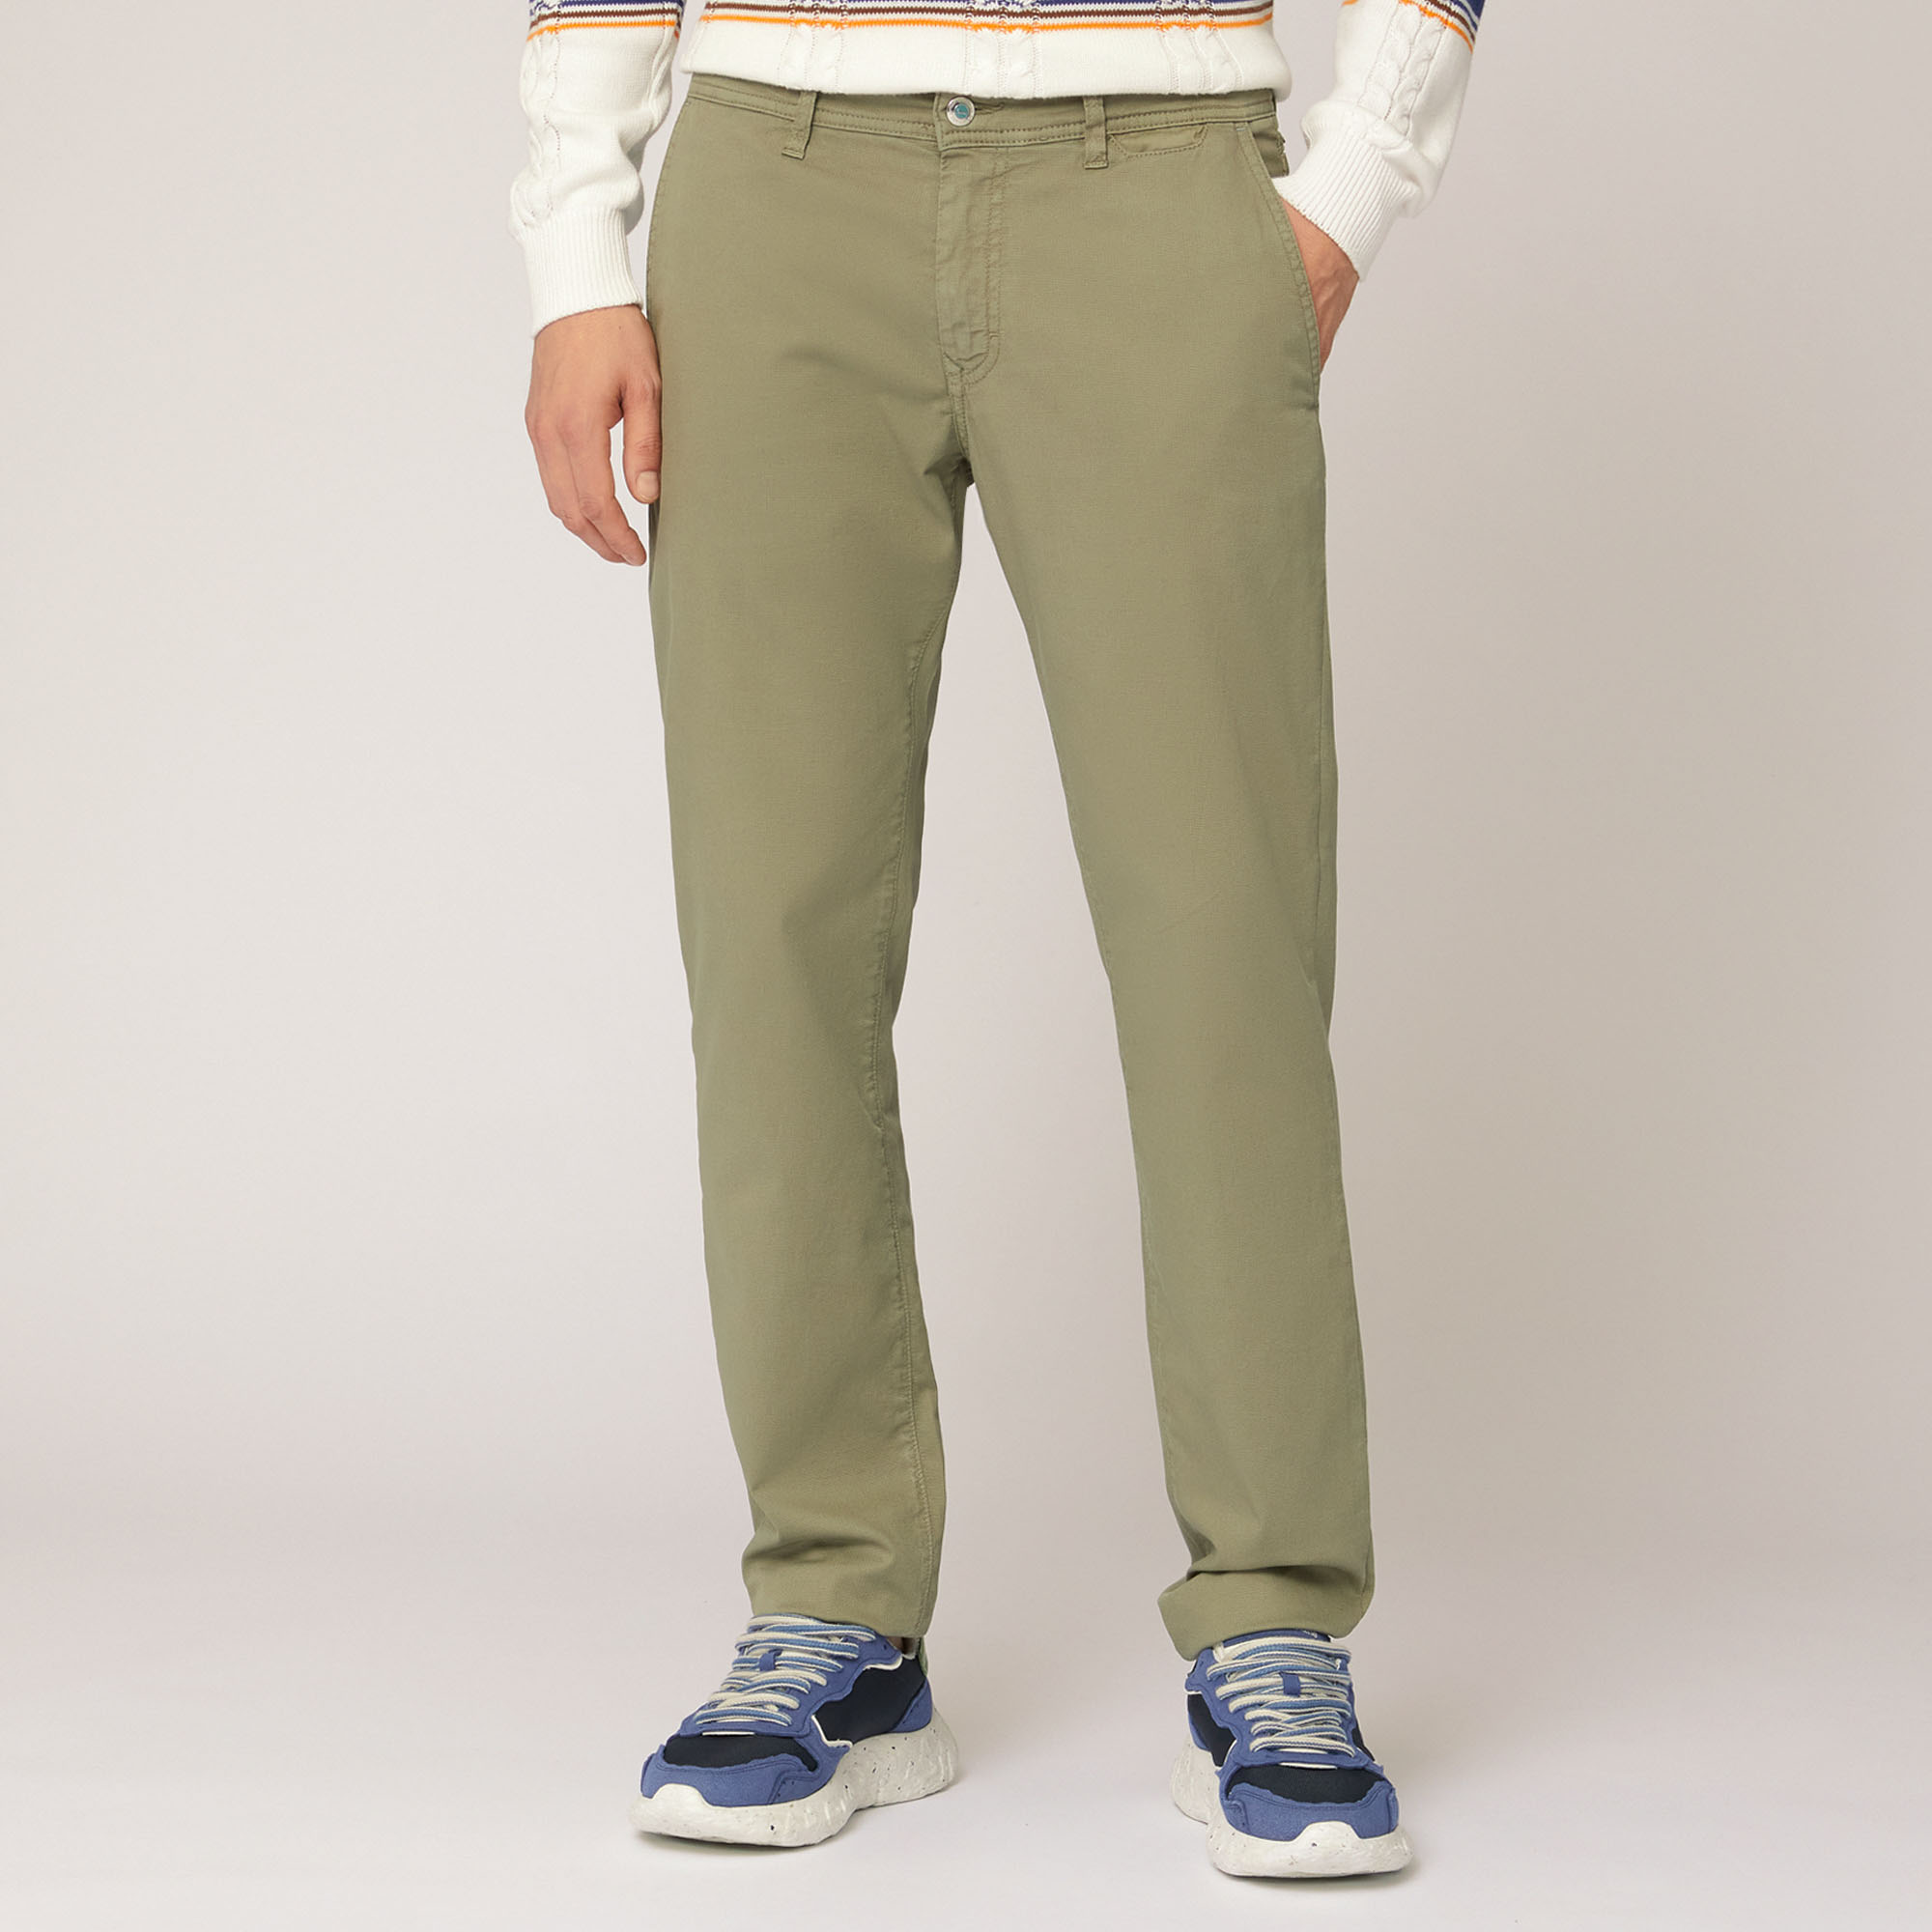 Pantaloni Colorfive, Verde, large image number 0